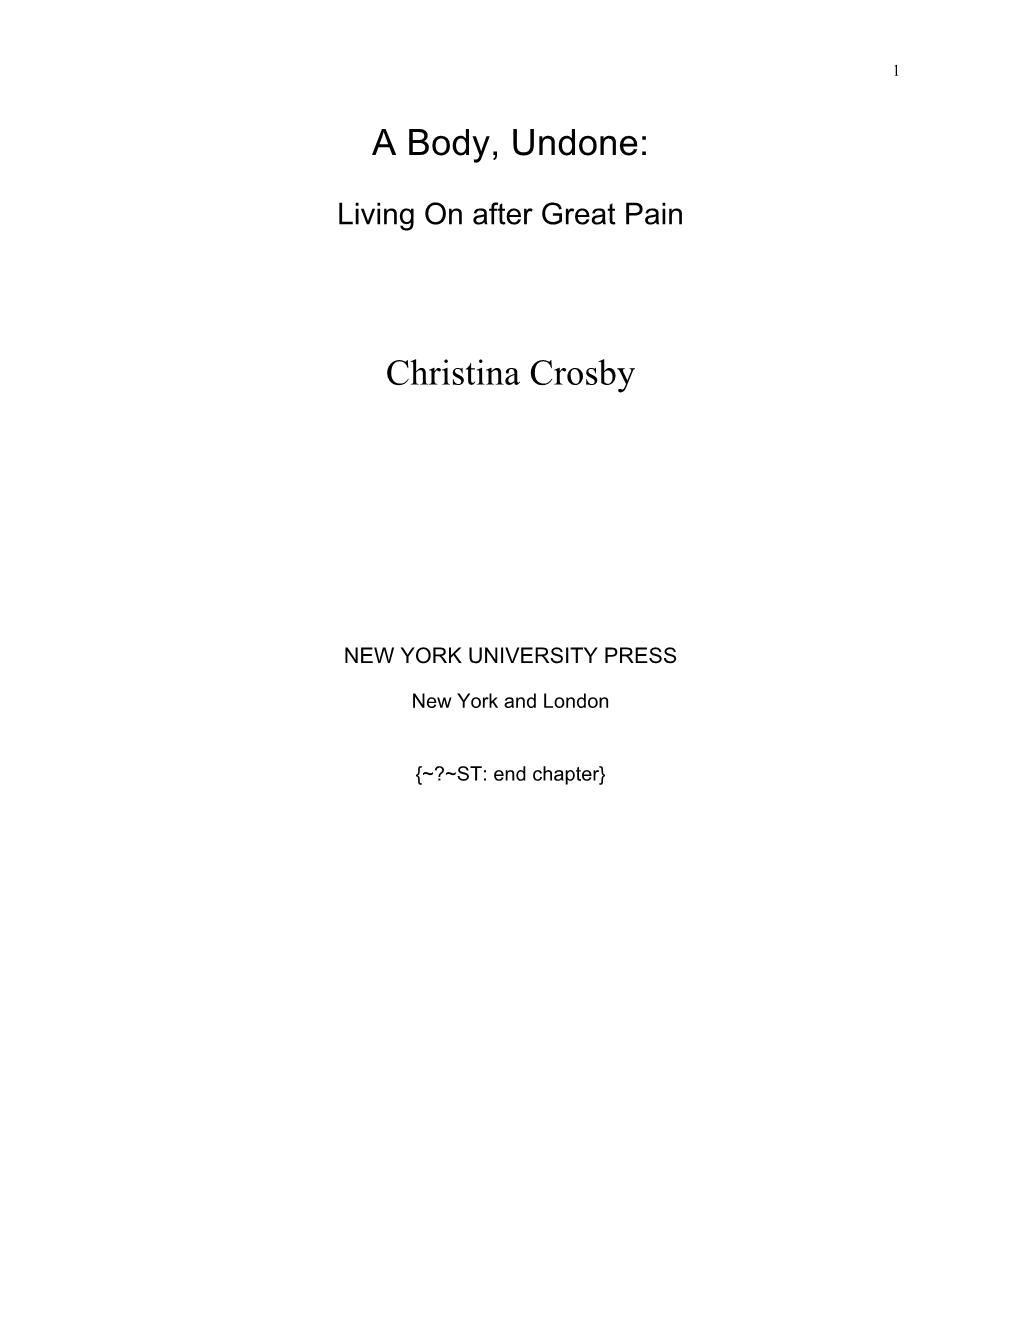 A Body, Undone: Christina Crosby